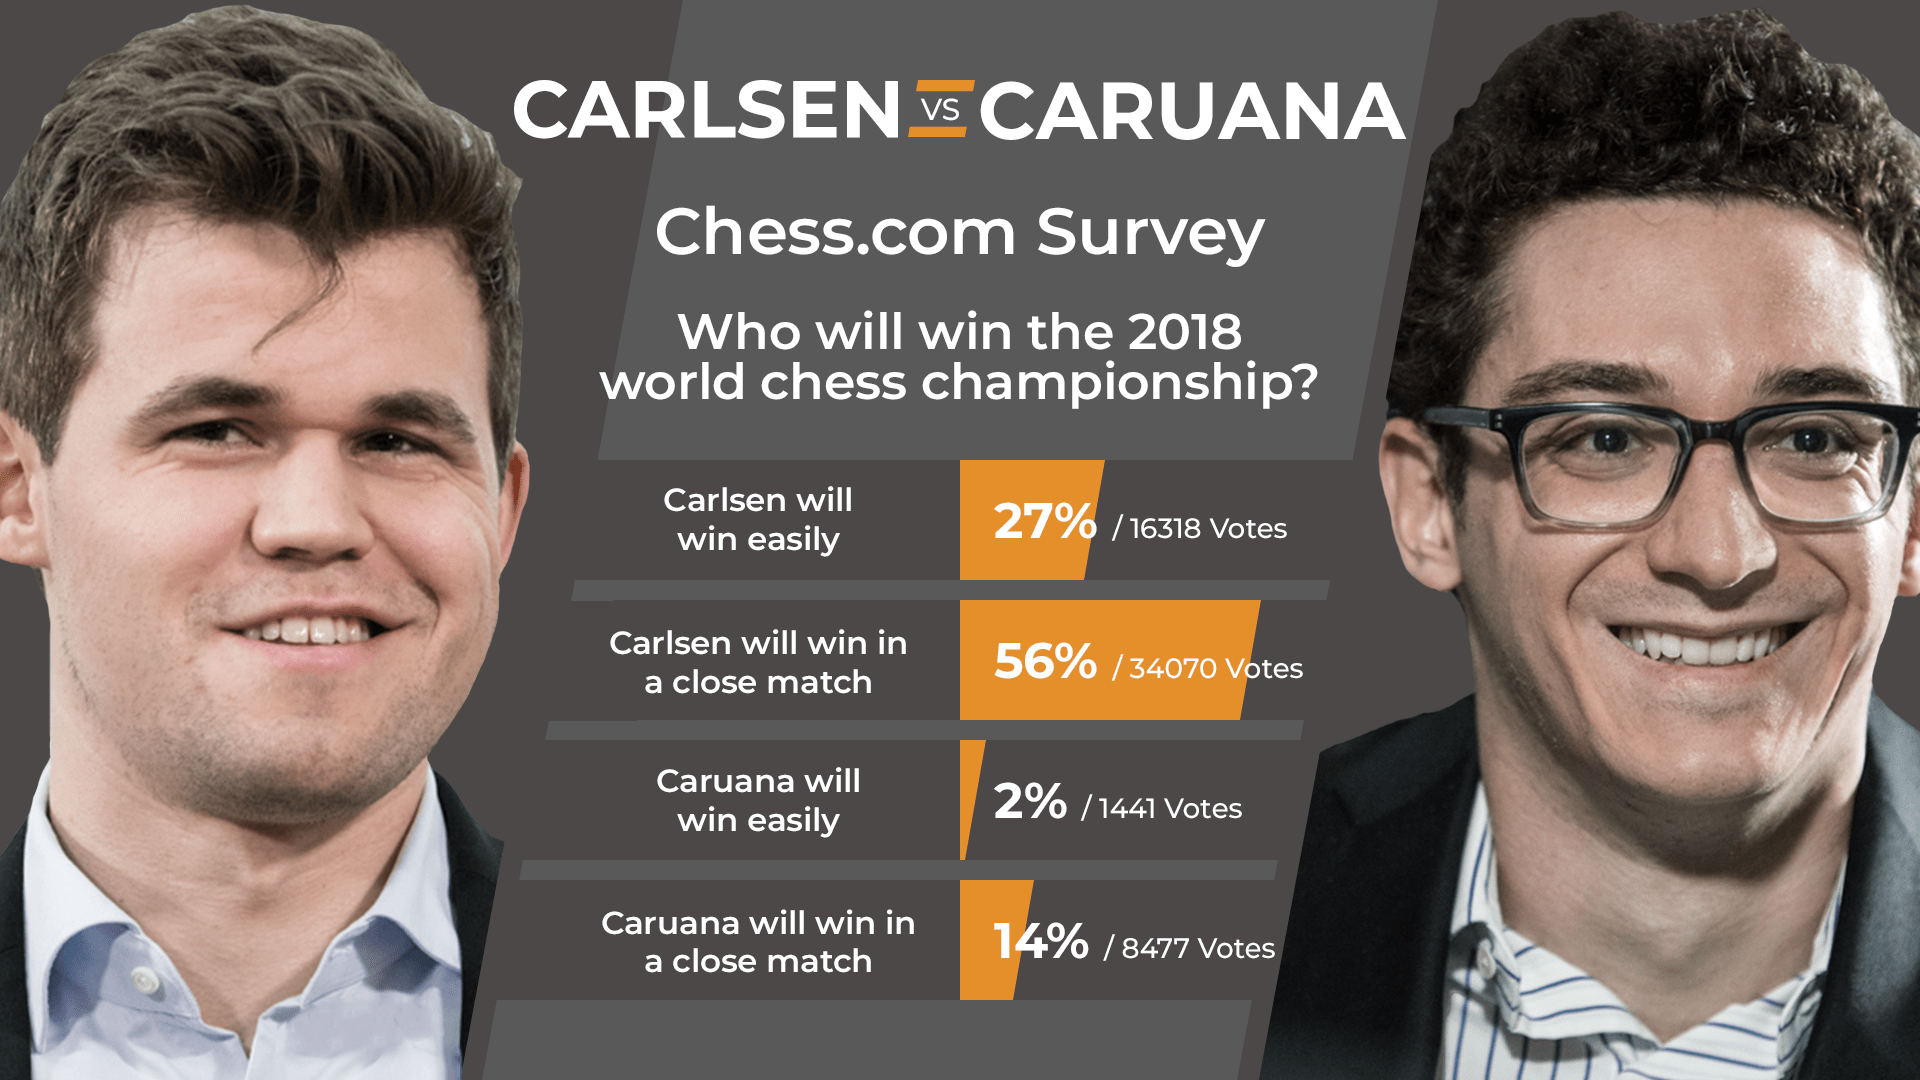 Magnus Carlsen beats Fabiano Caruana to win World Chess Championship